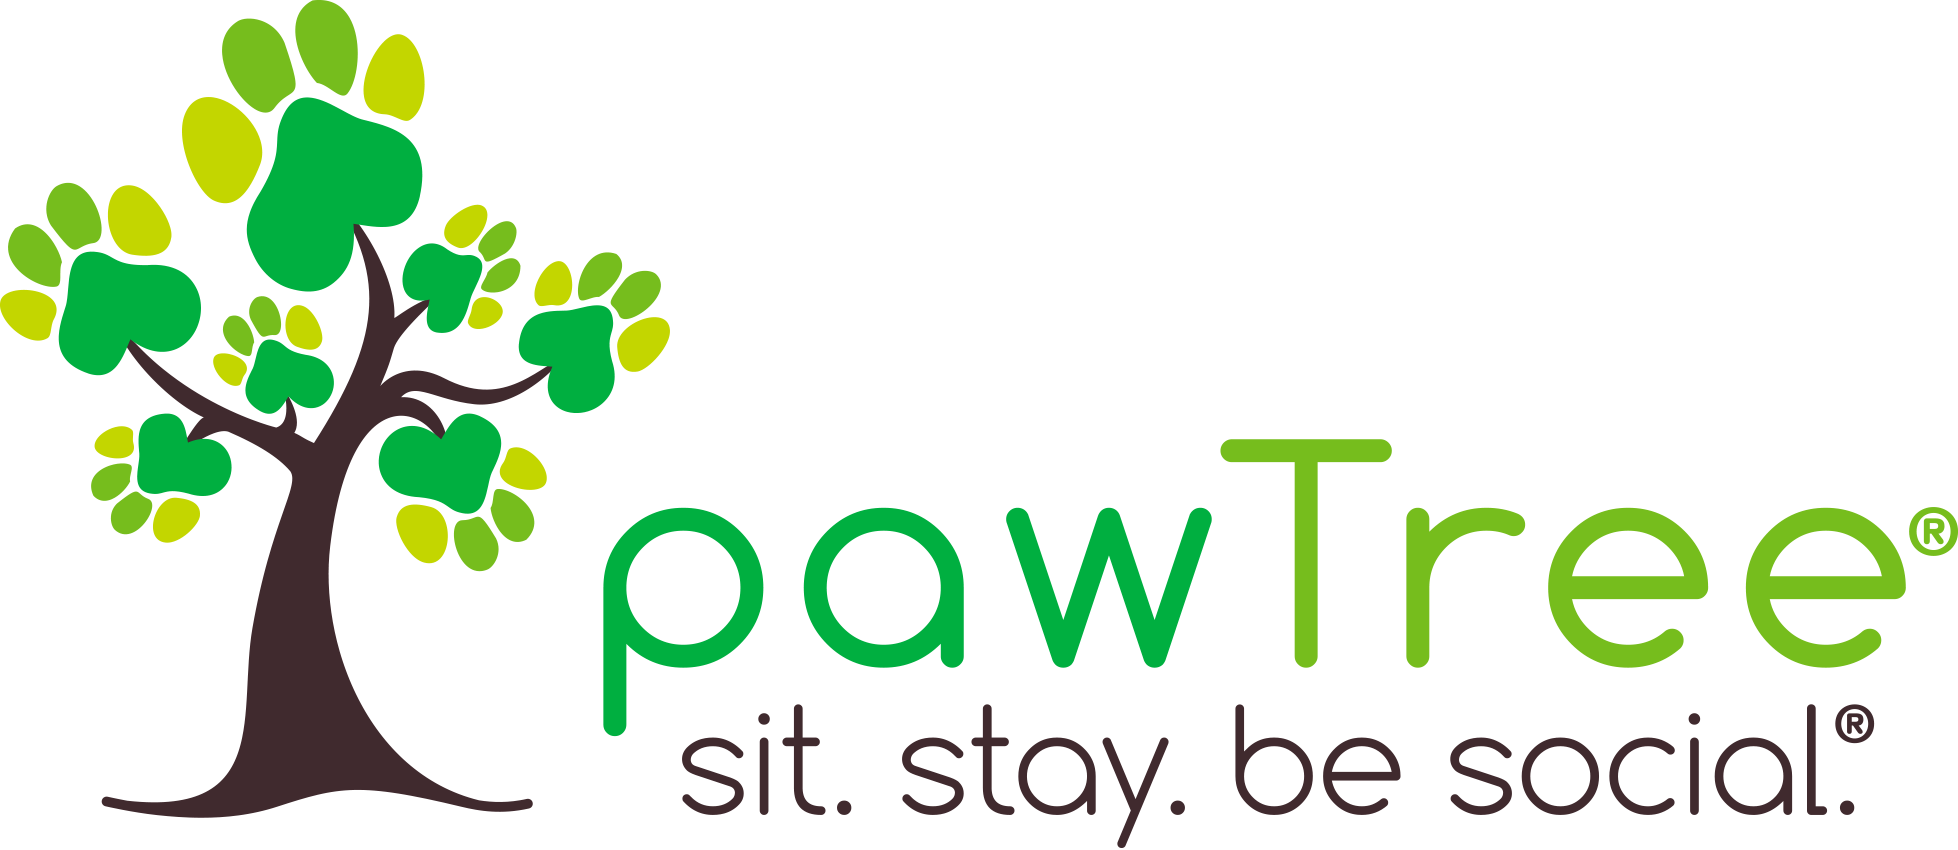 pawtree